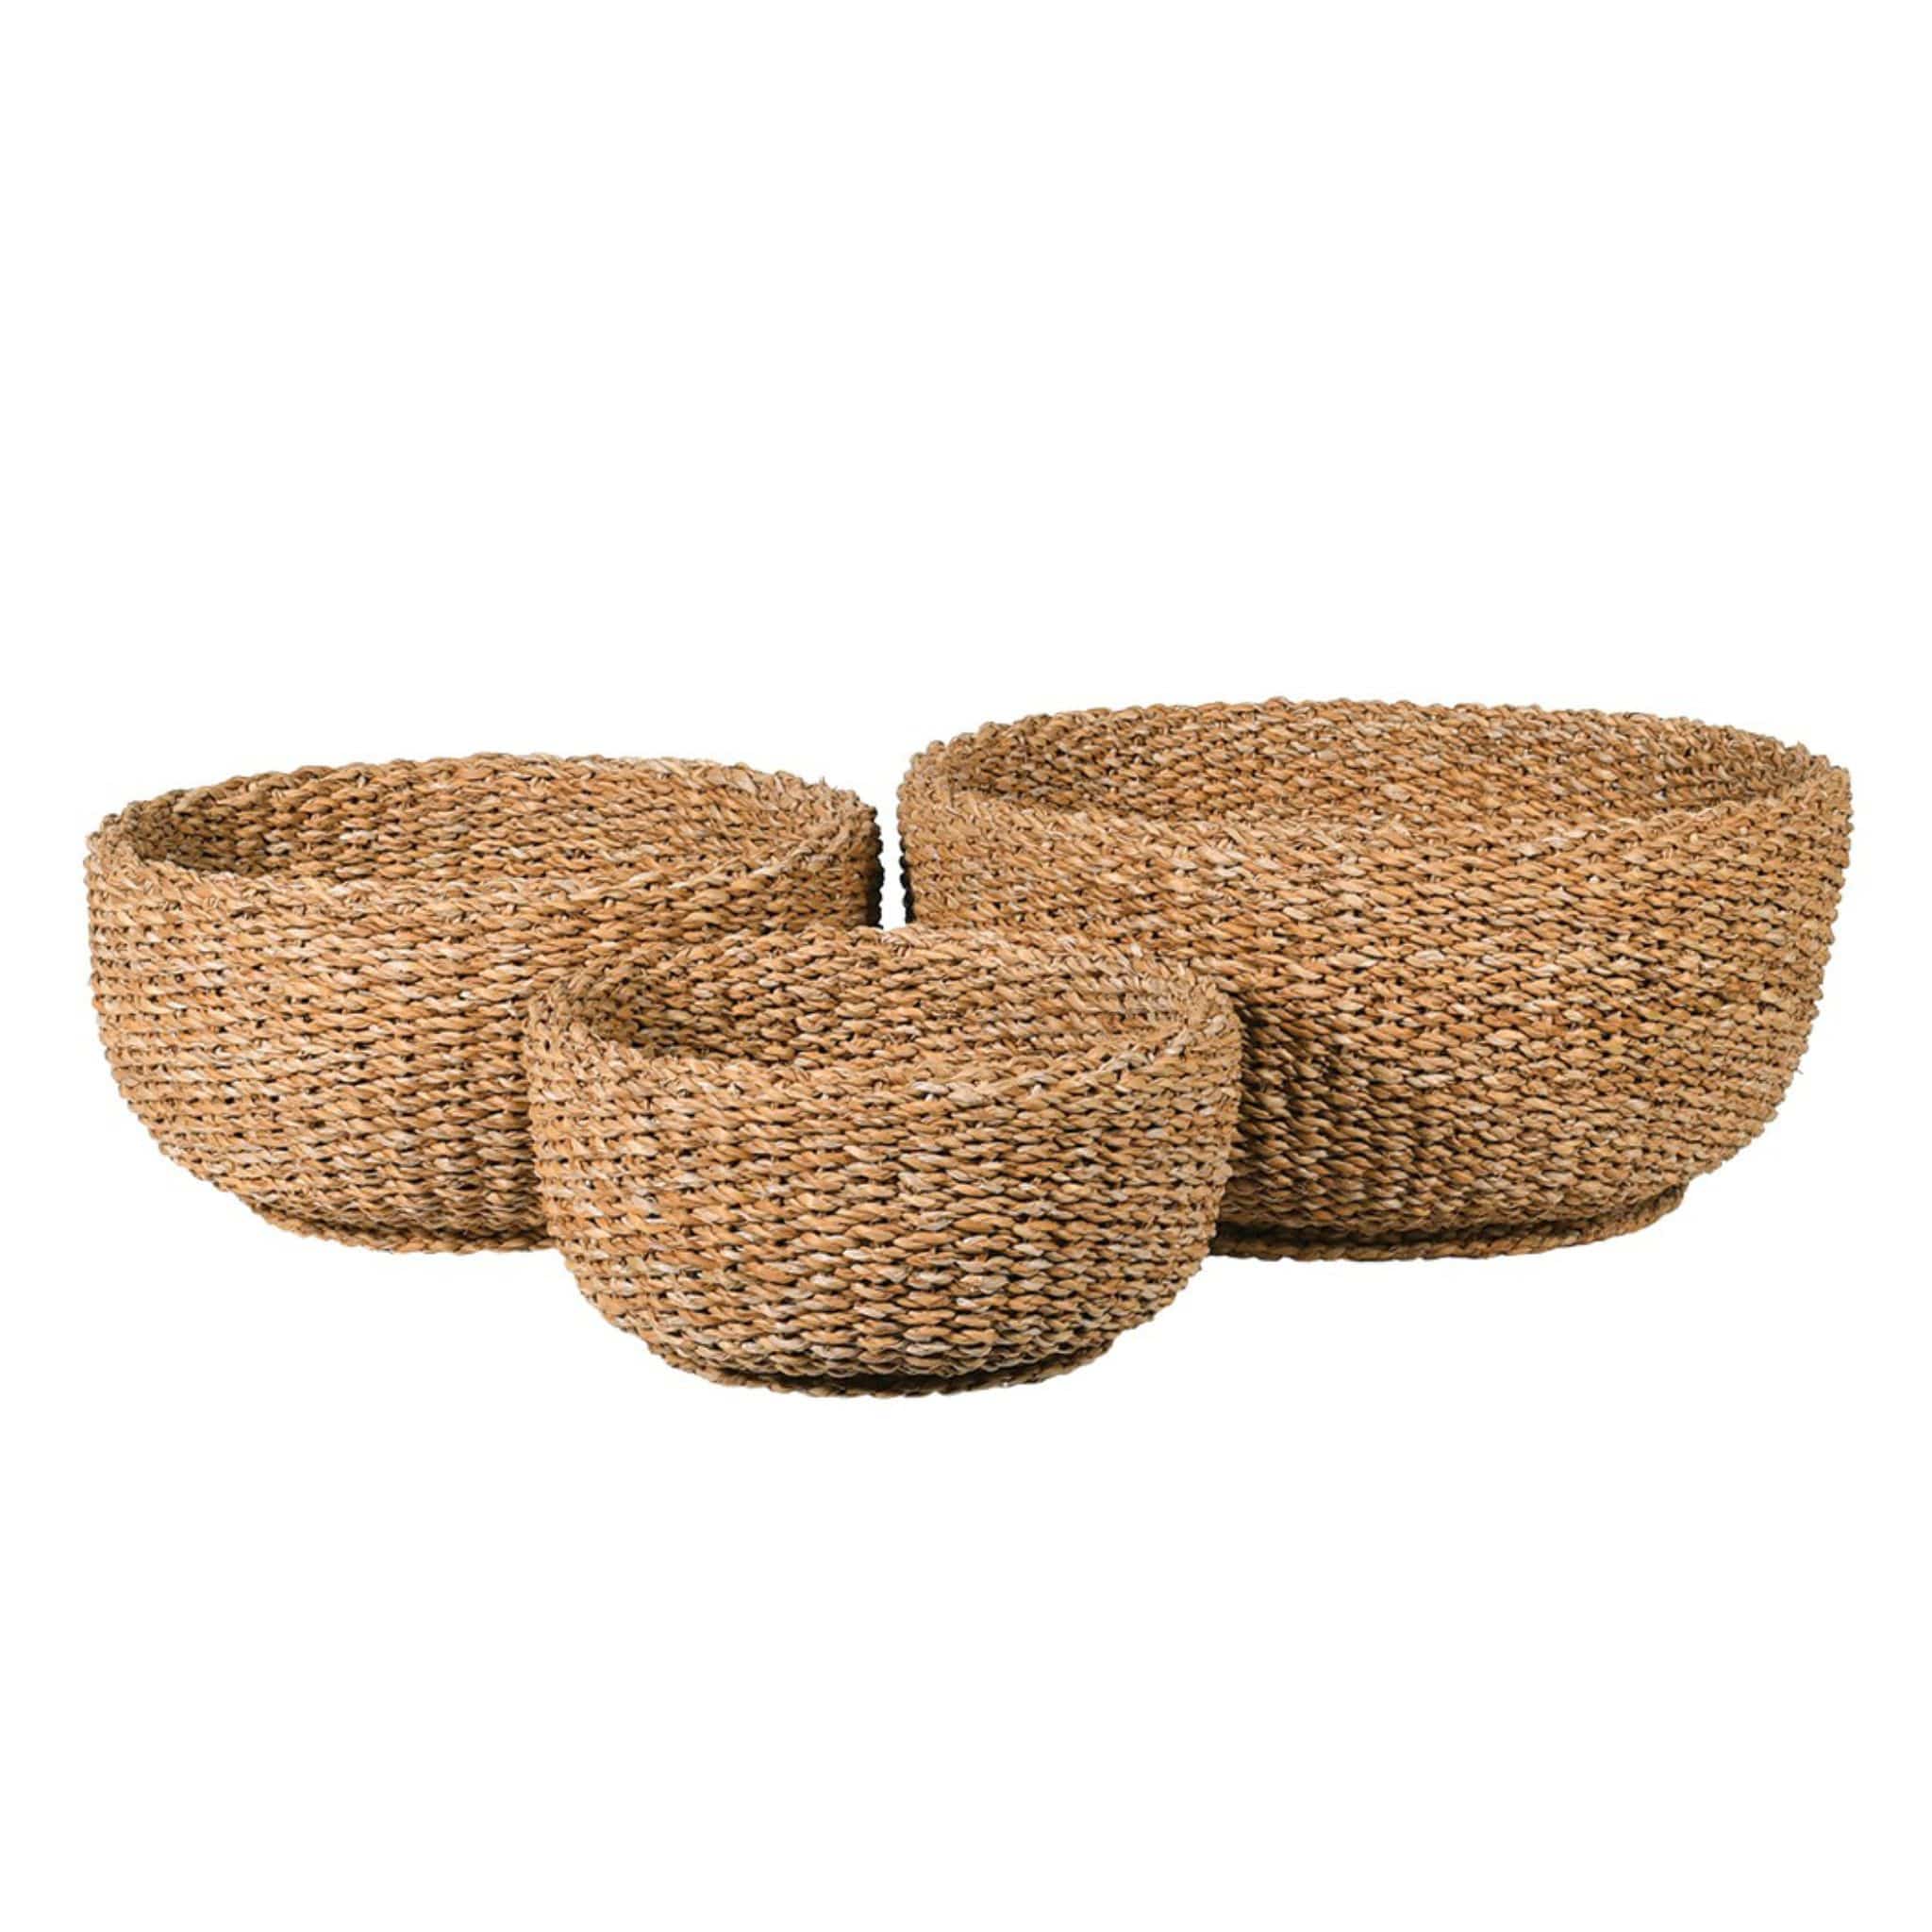 Escapology Handwoven Natural Seagrass Baskets - Set of 3 - escapologyhome.co.uk